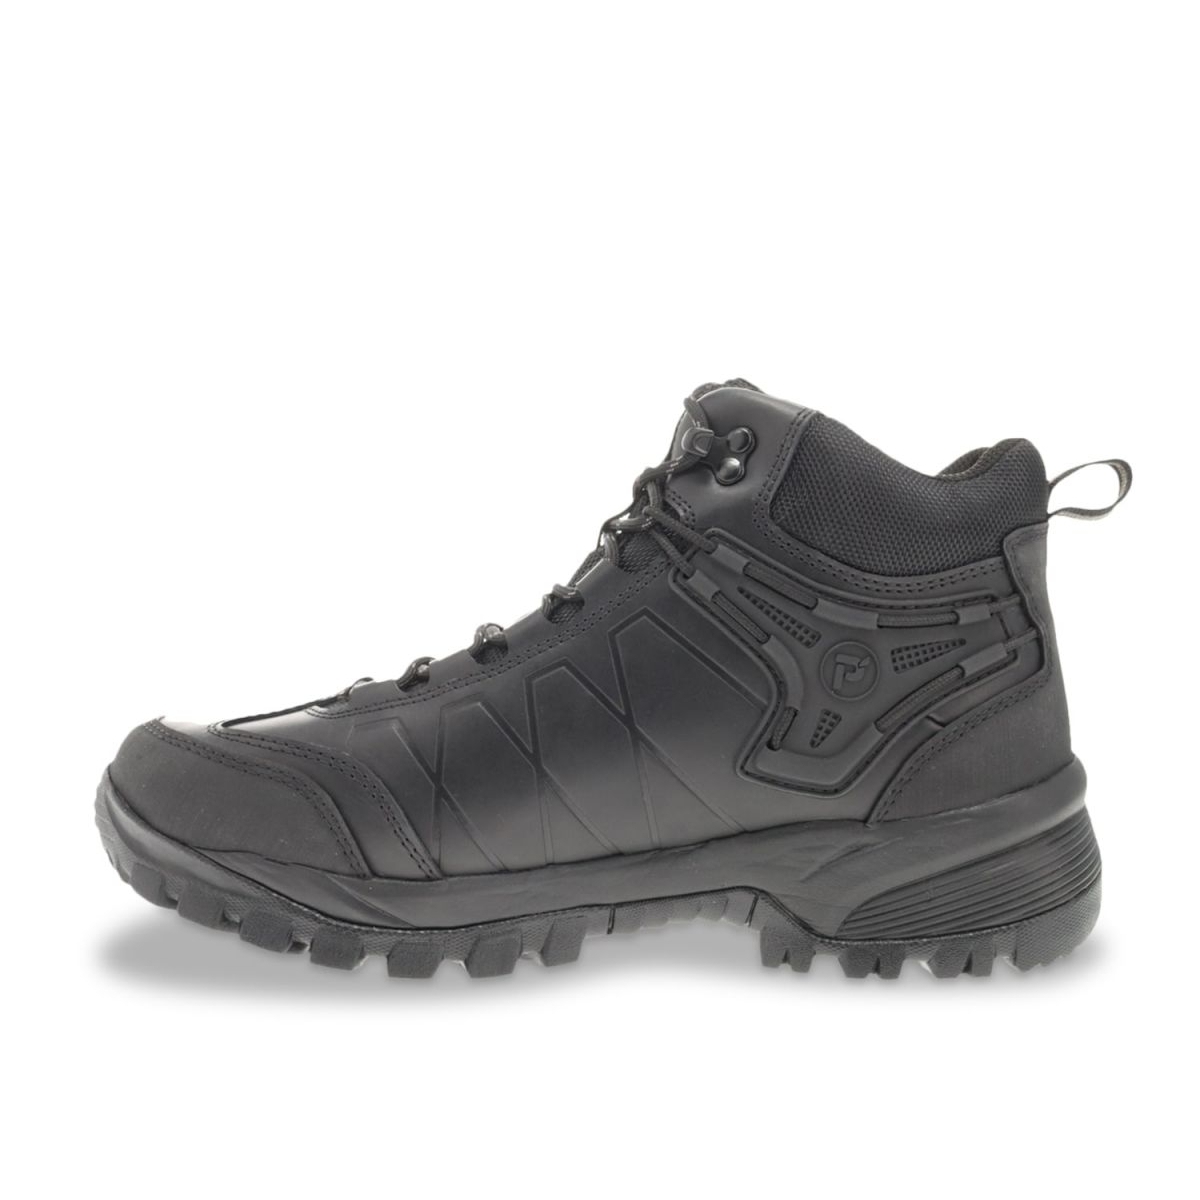 Propet Men's Ridge Walker Force Hiking Boots Black - MBA052LBLK BLACK - BLACK, 9.5 XX-Wide